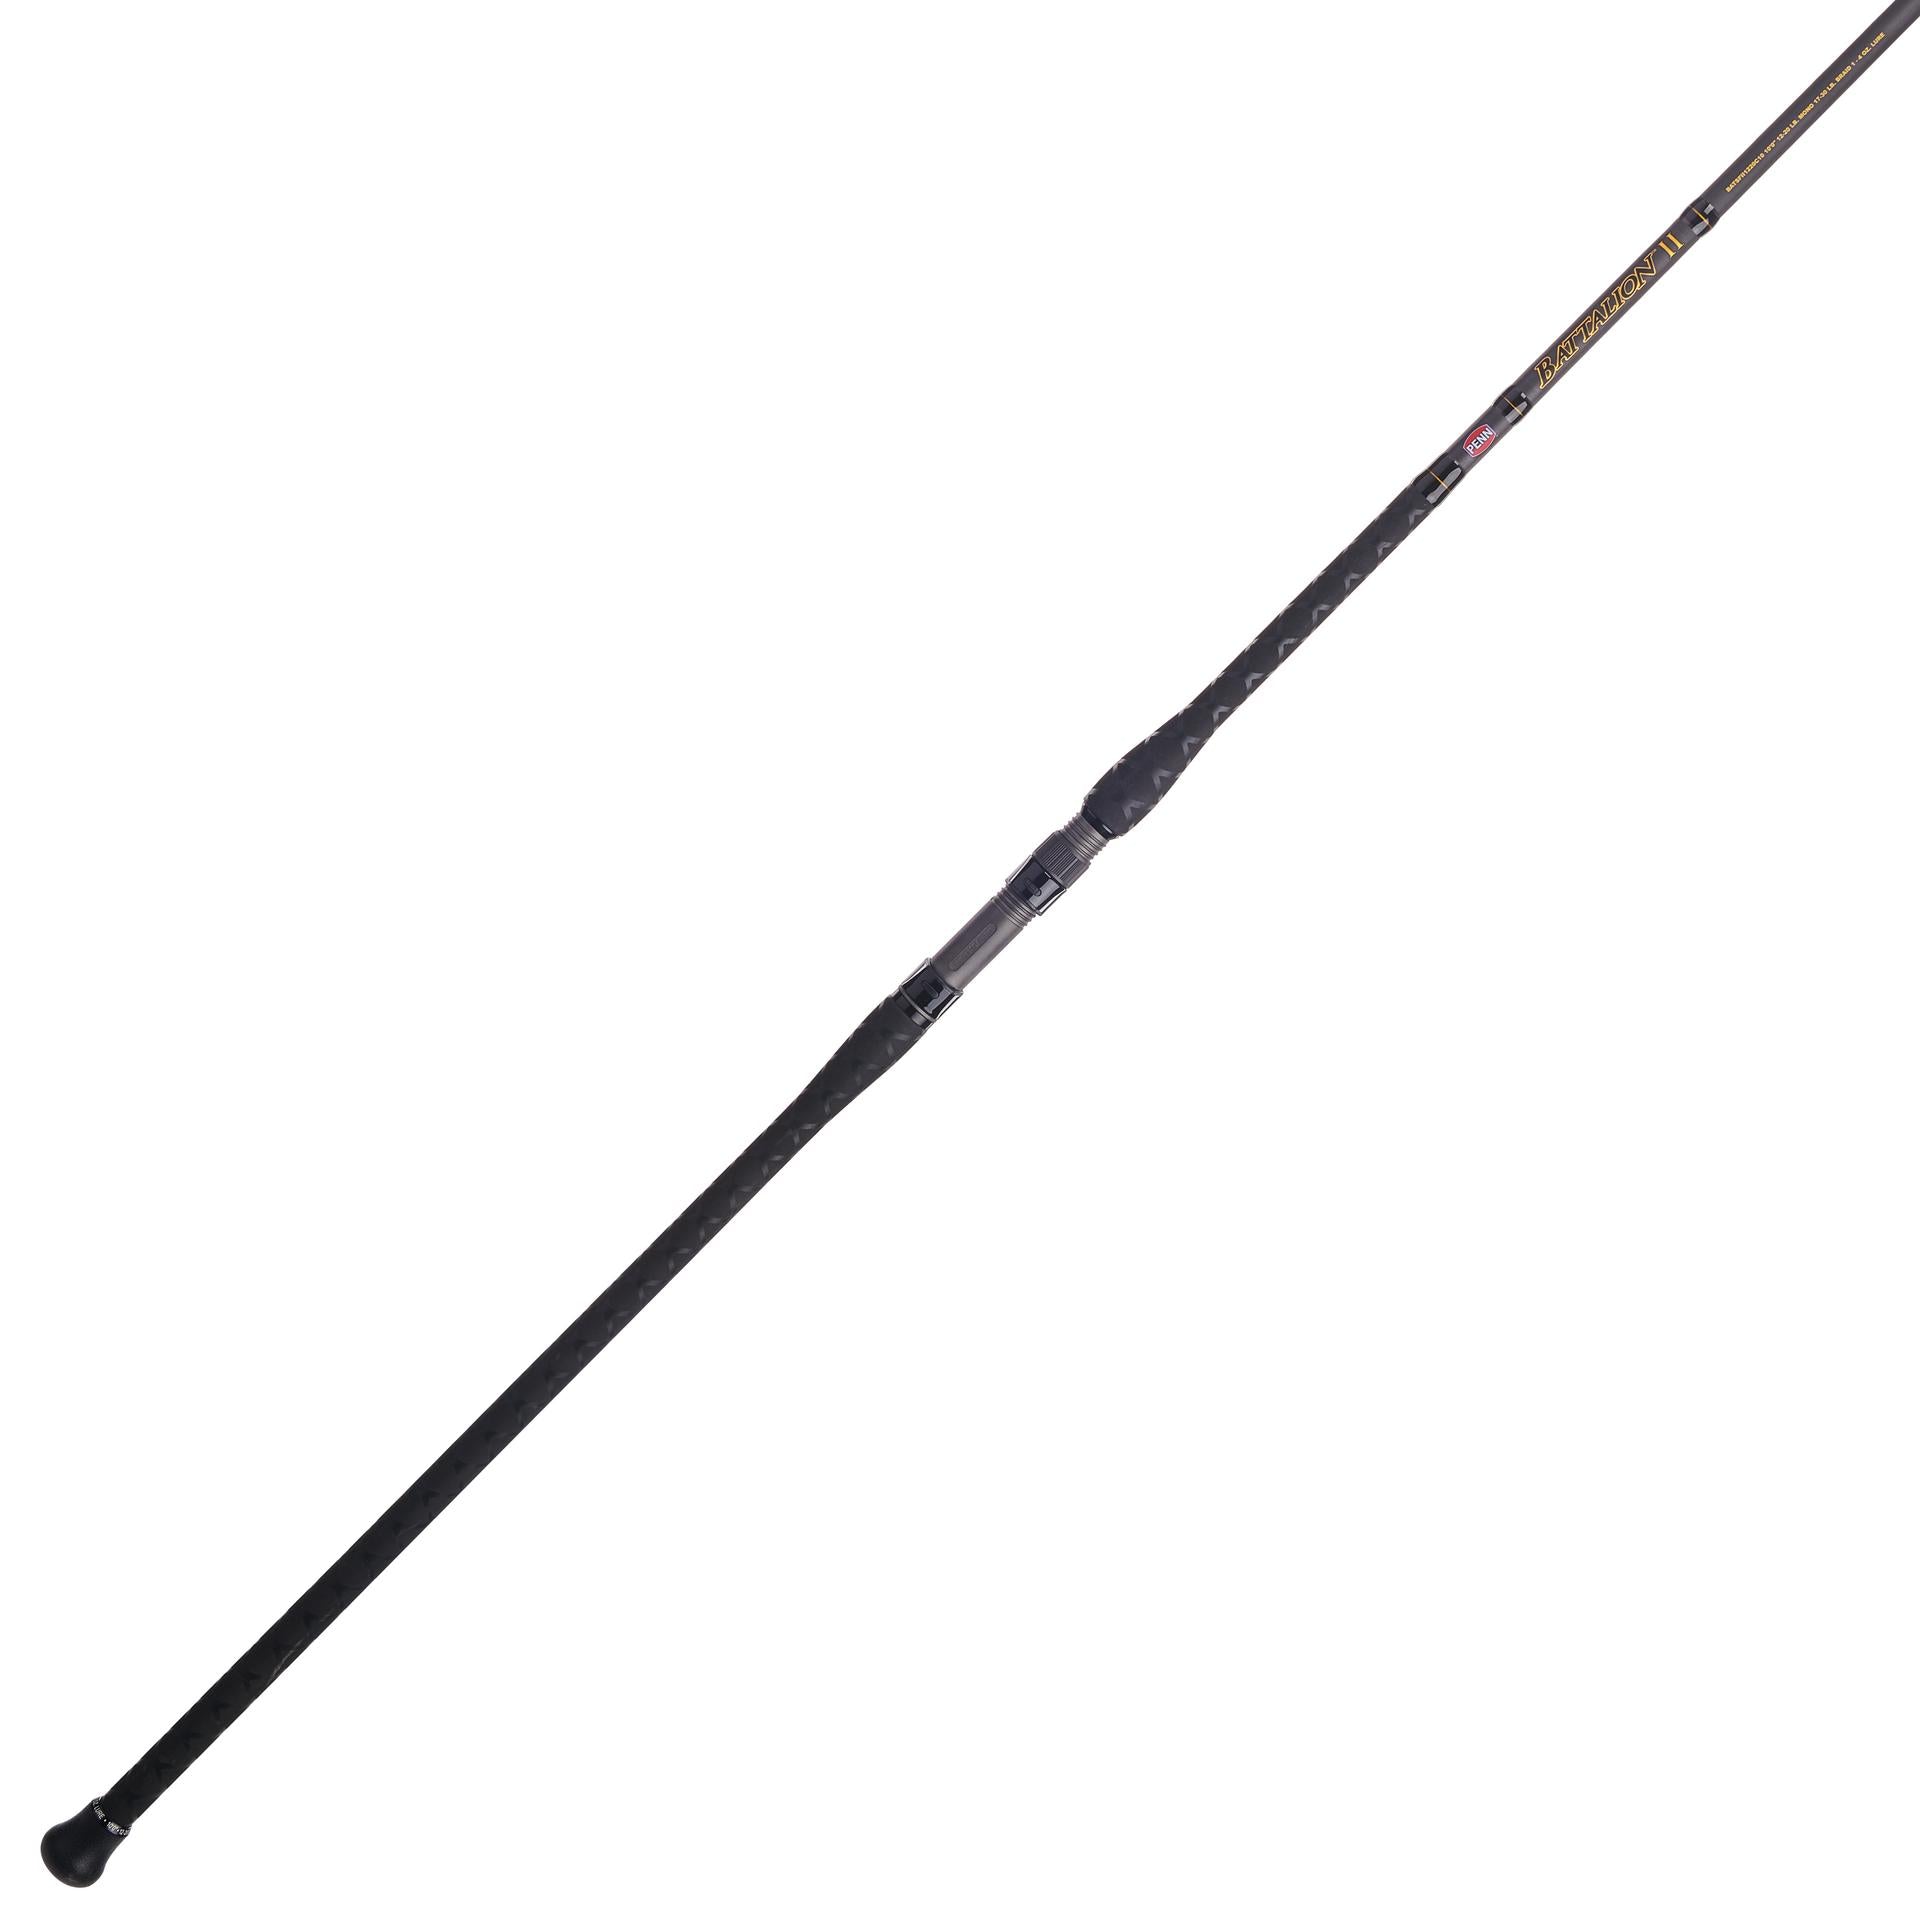 Used Penn The Penn Slammer Slc 2701ax 7' Fishing Rod 20-50lb